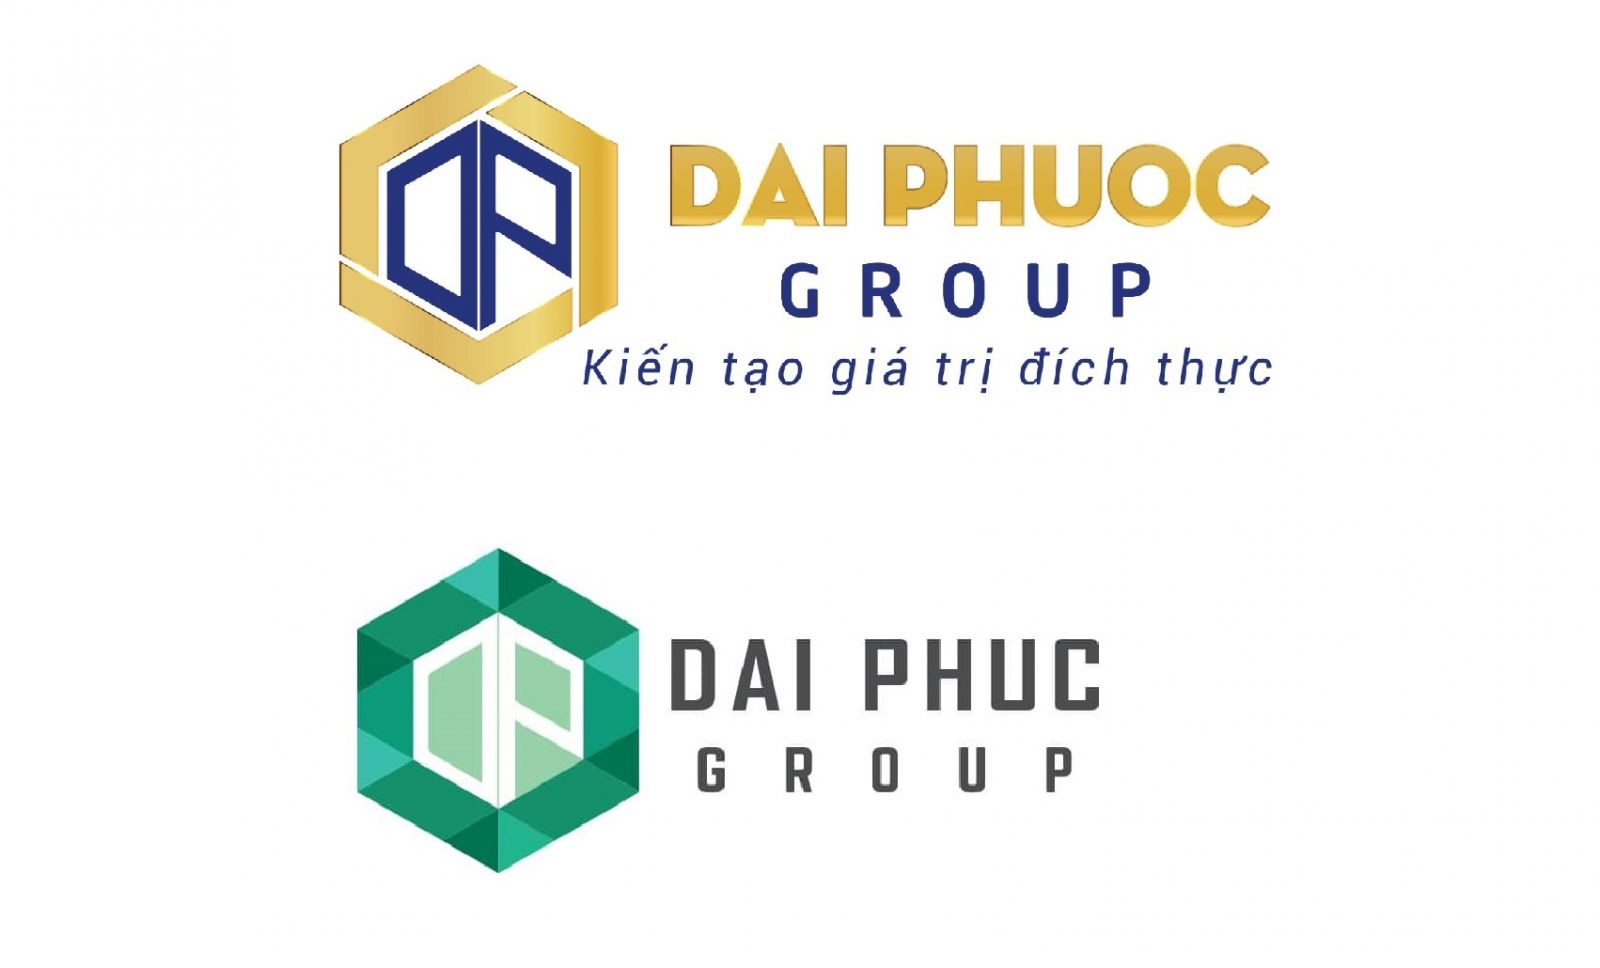 Dai Phuoc Group sử dụng logo gây nhầm lẫn với Dai Phuc Group